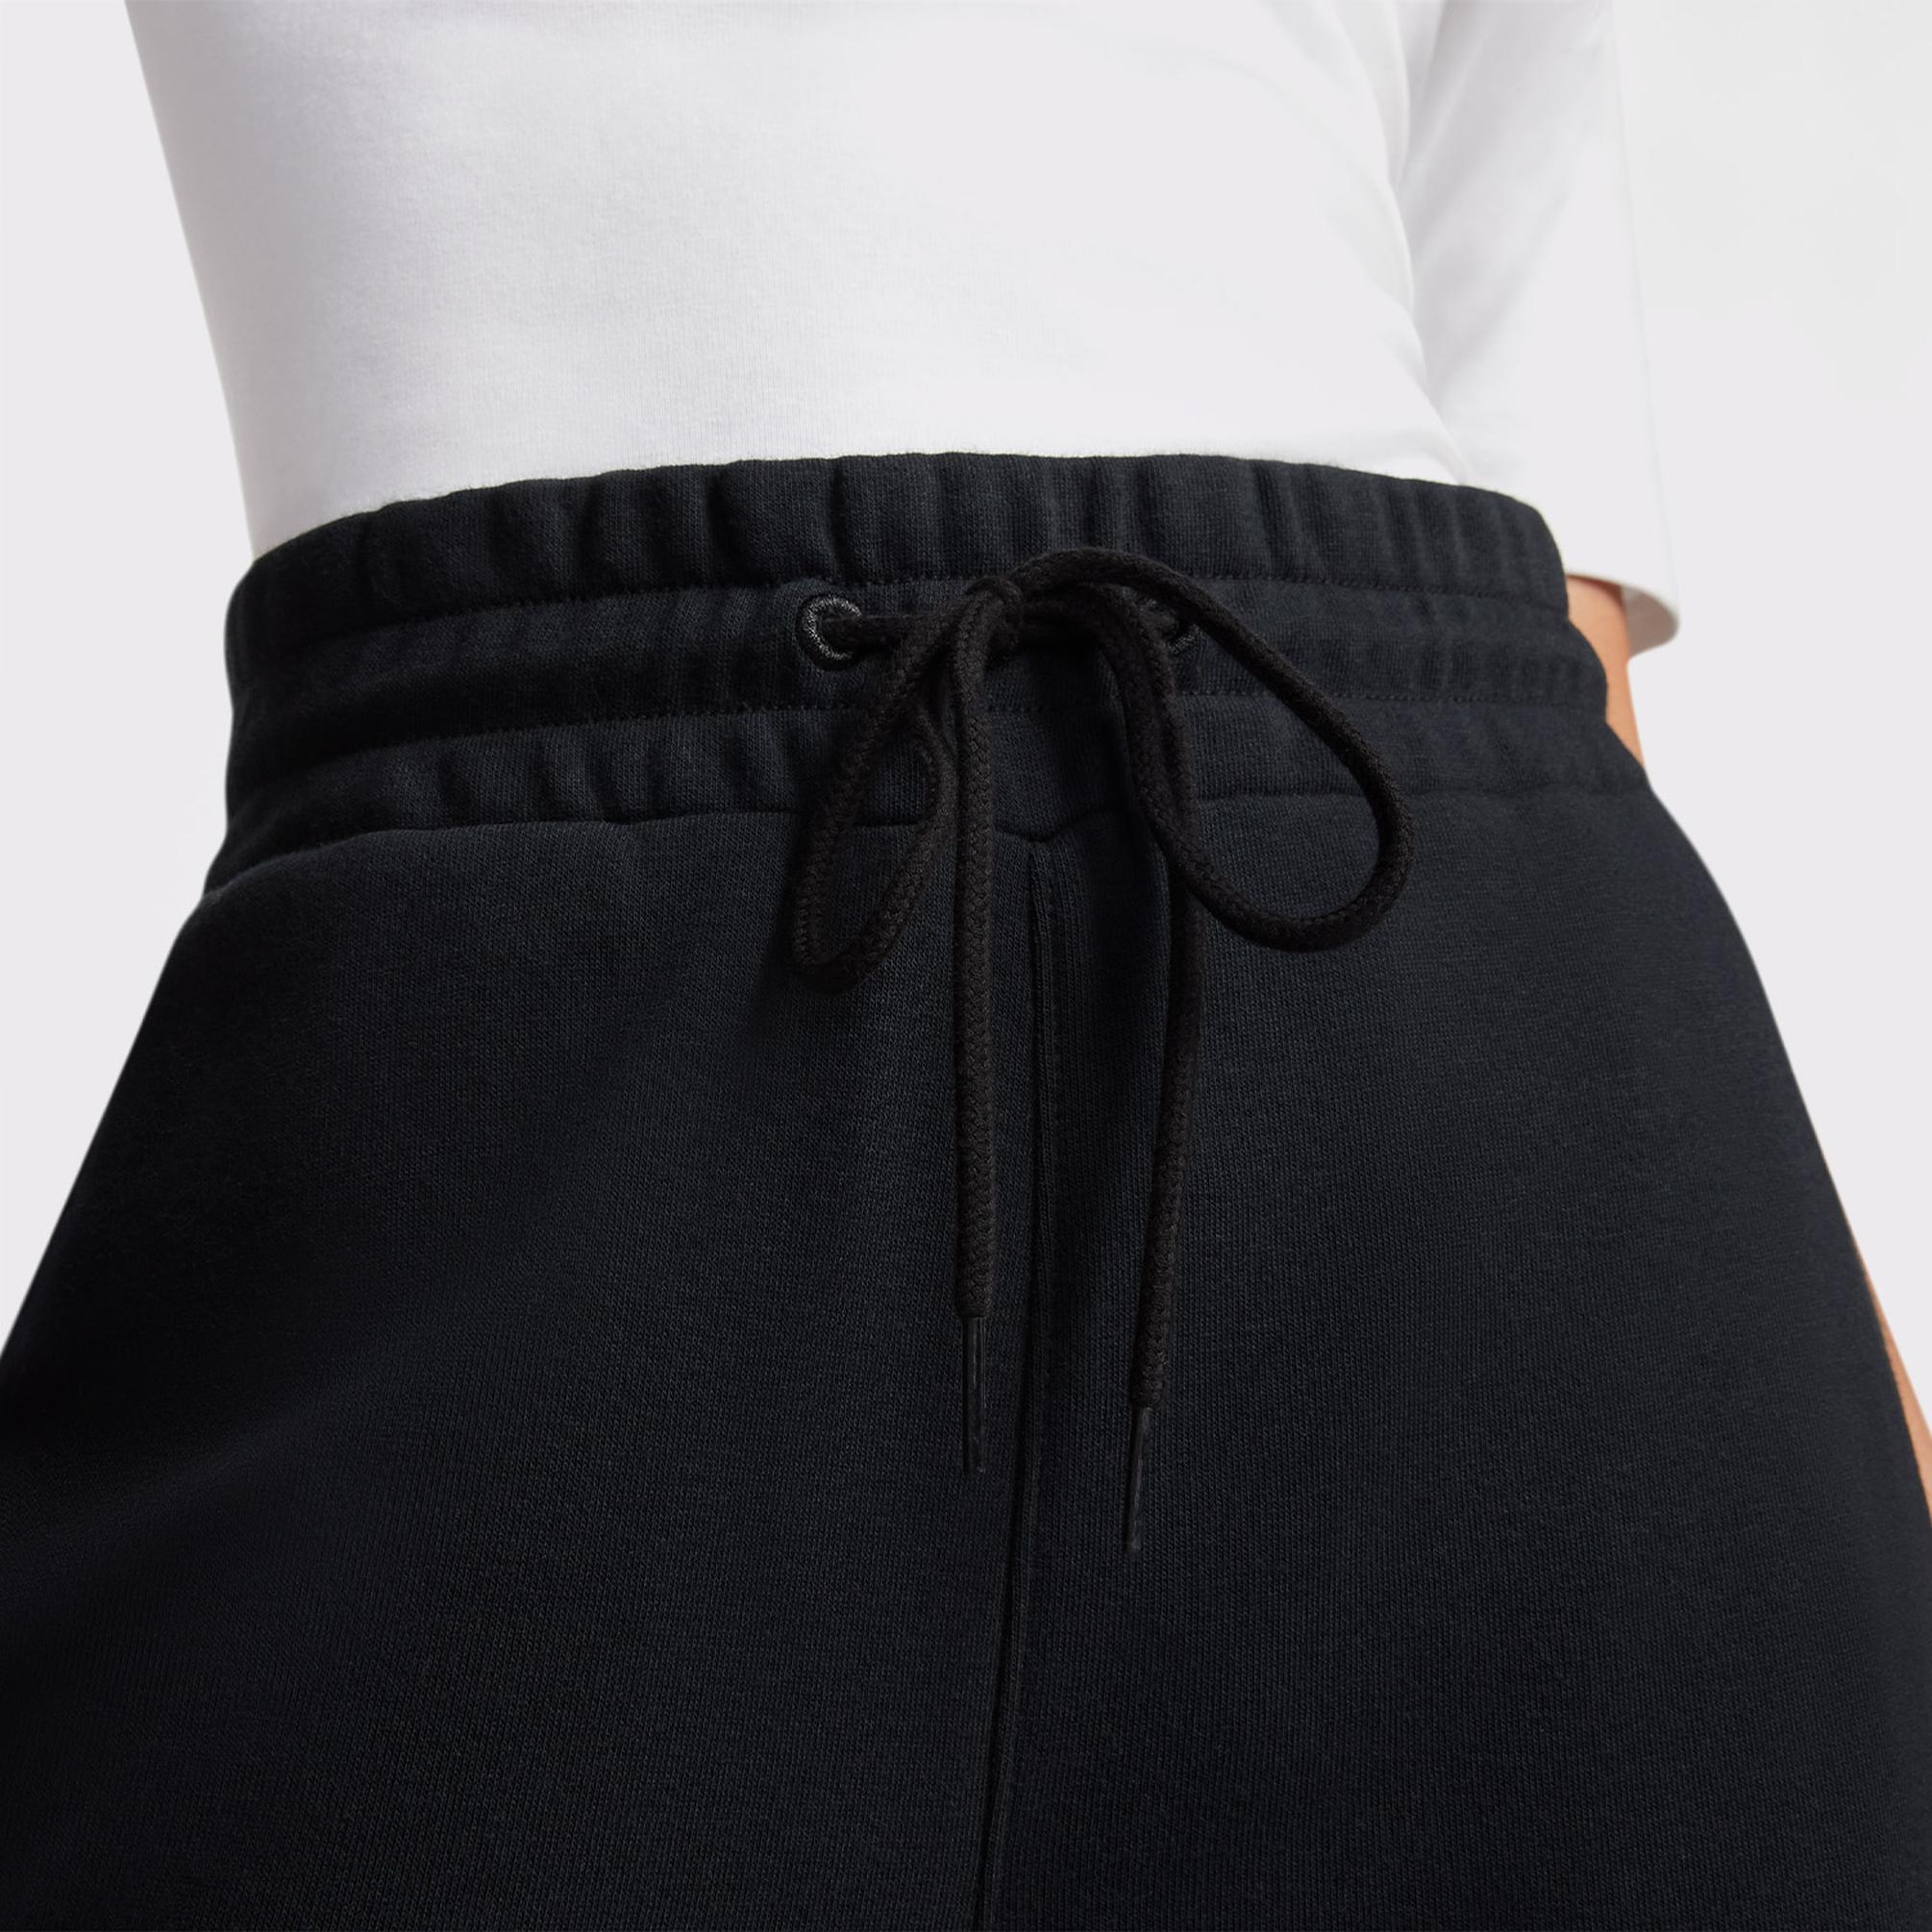  Converse Fashion Knit Kargo  Kadın Siyah Pantolon